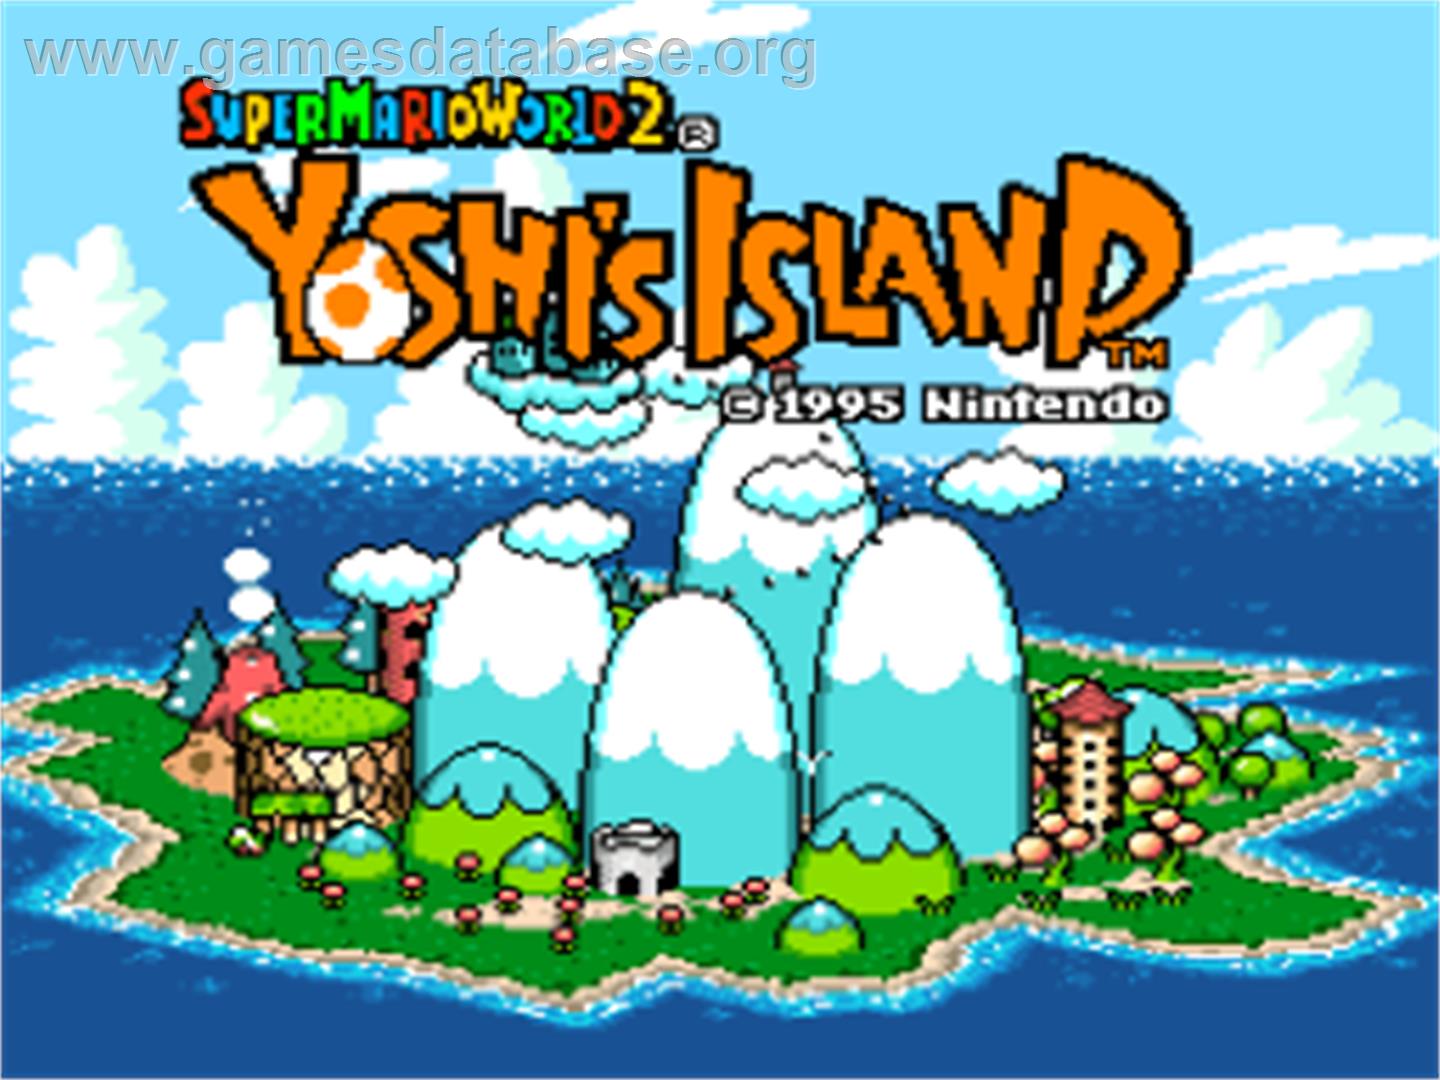 Super Mario World 2: Yoshi's Island - Nintendo SNES - Artwork - Title Screen